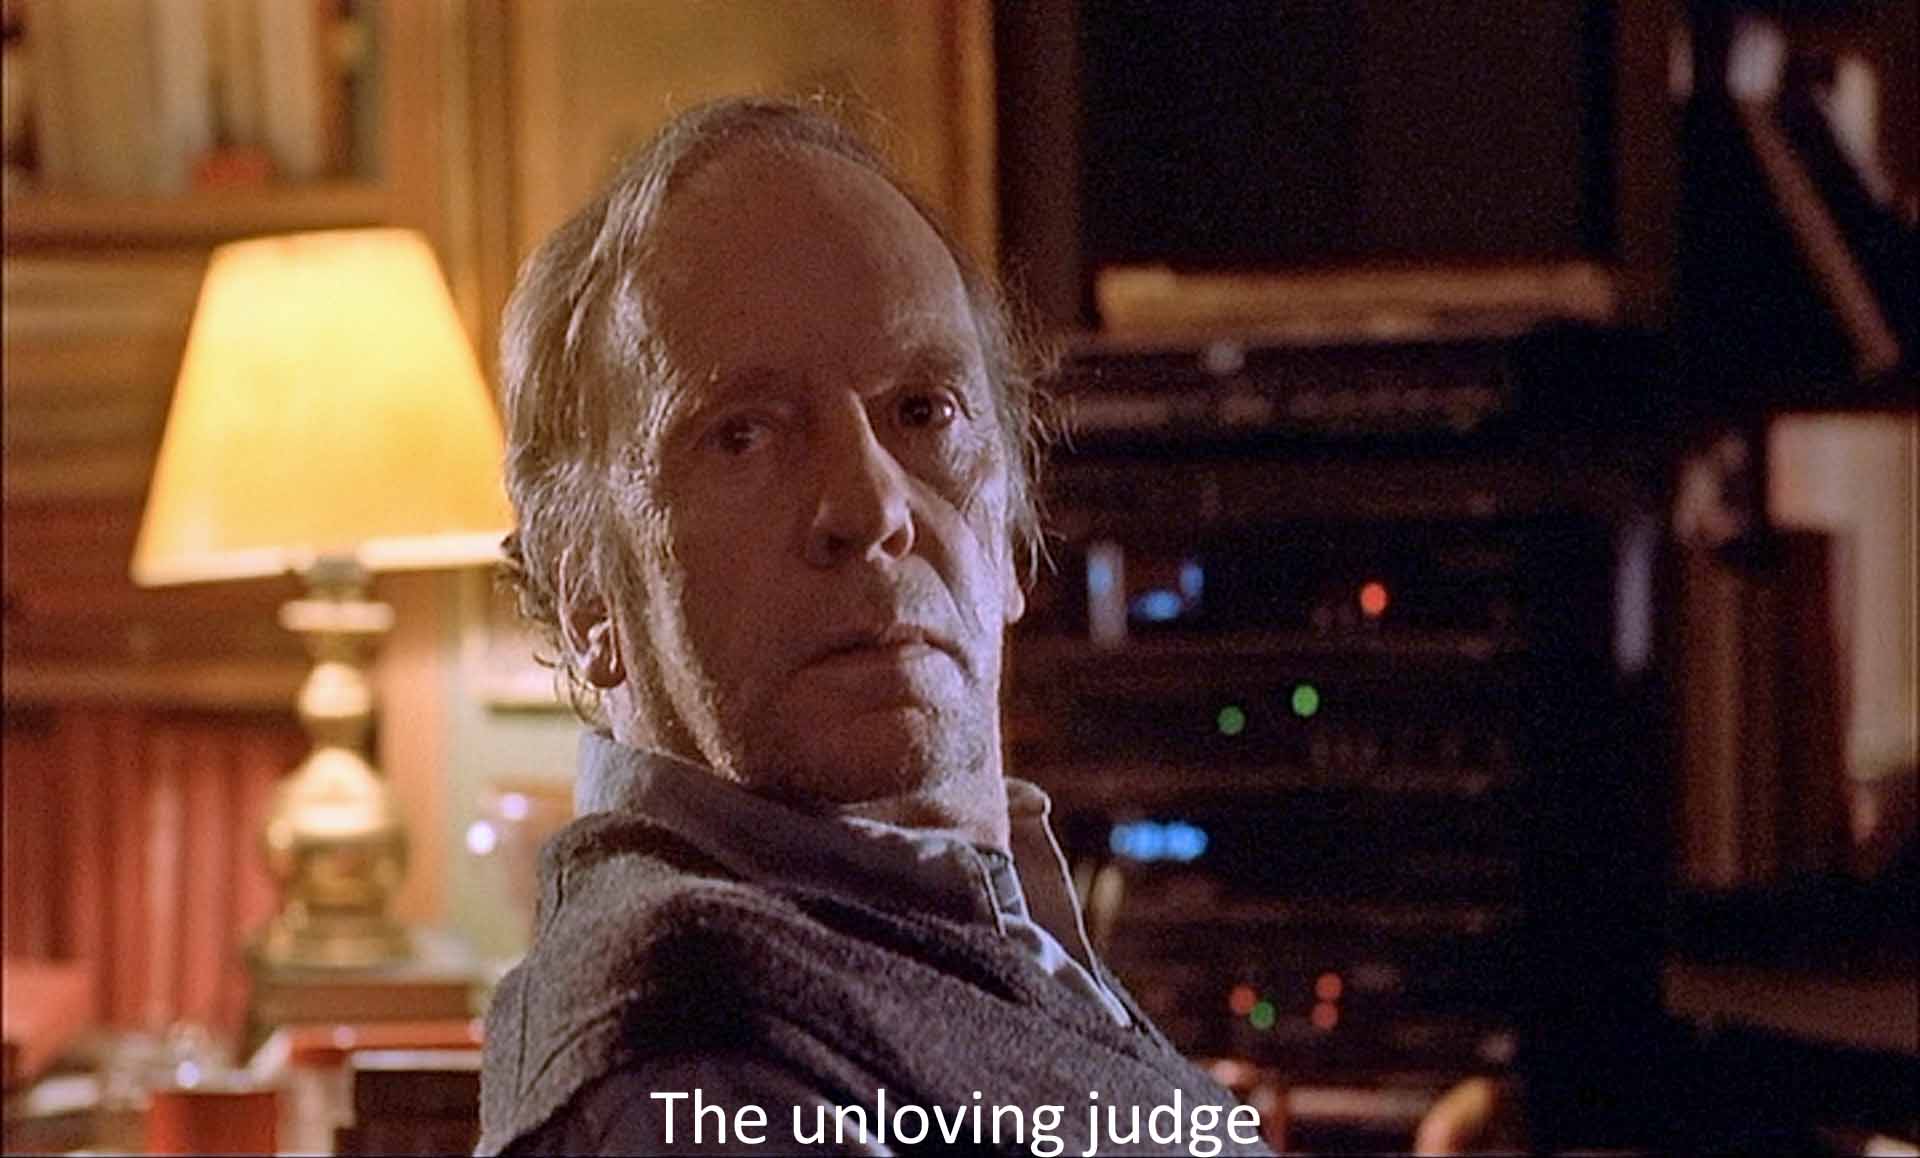 The unloving judge